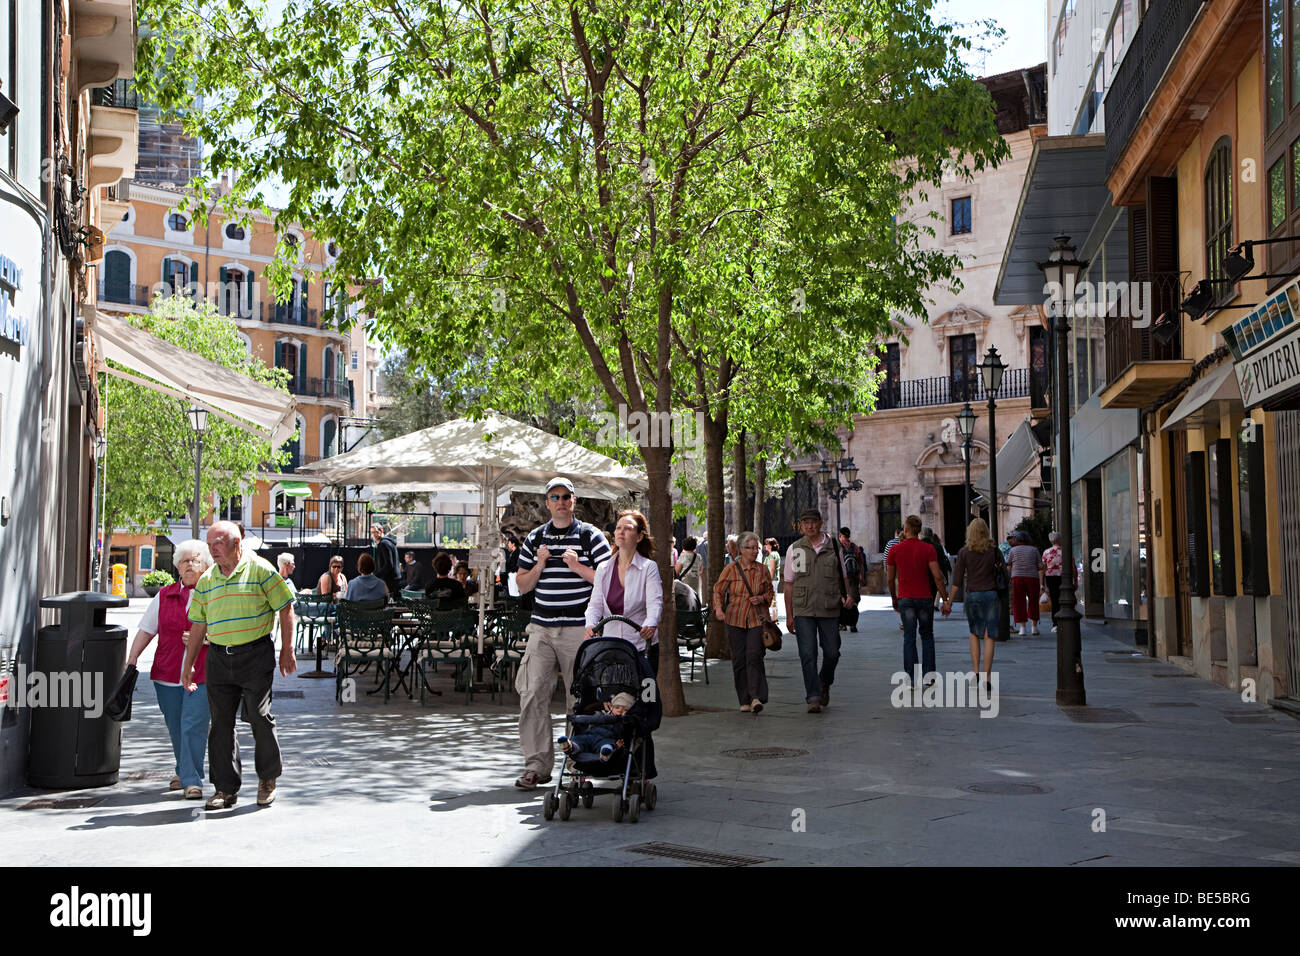 People walking in shopping street with couple pushing pram Palma Mallorca Spain Stock Photo